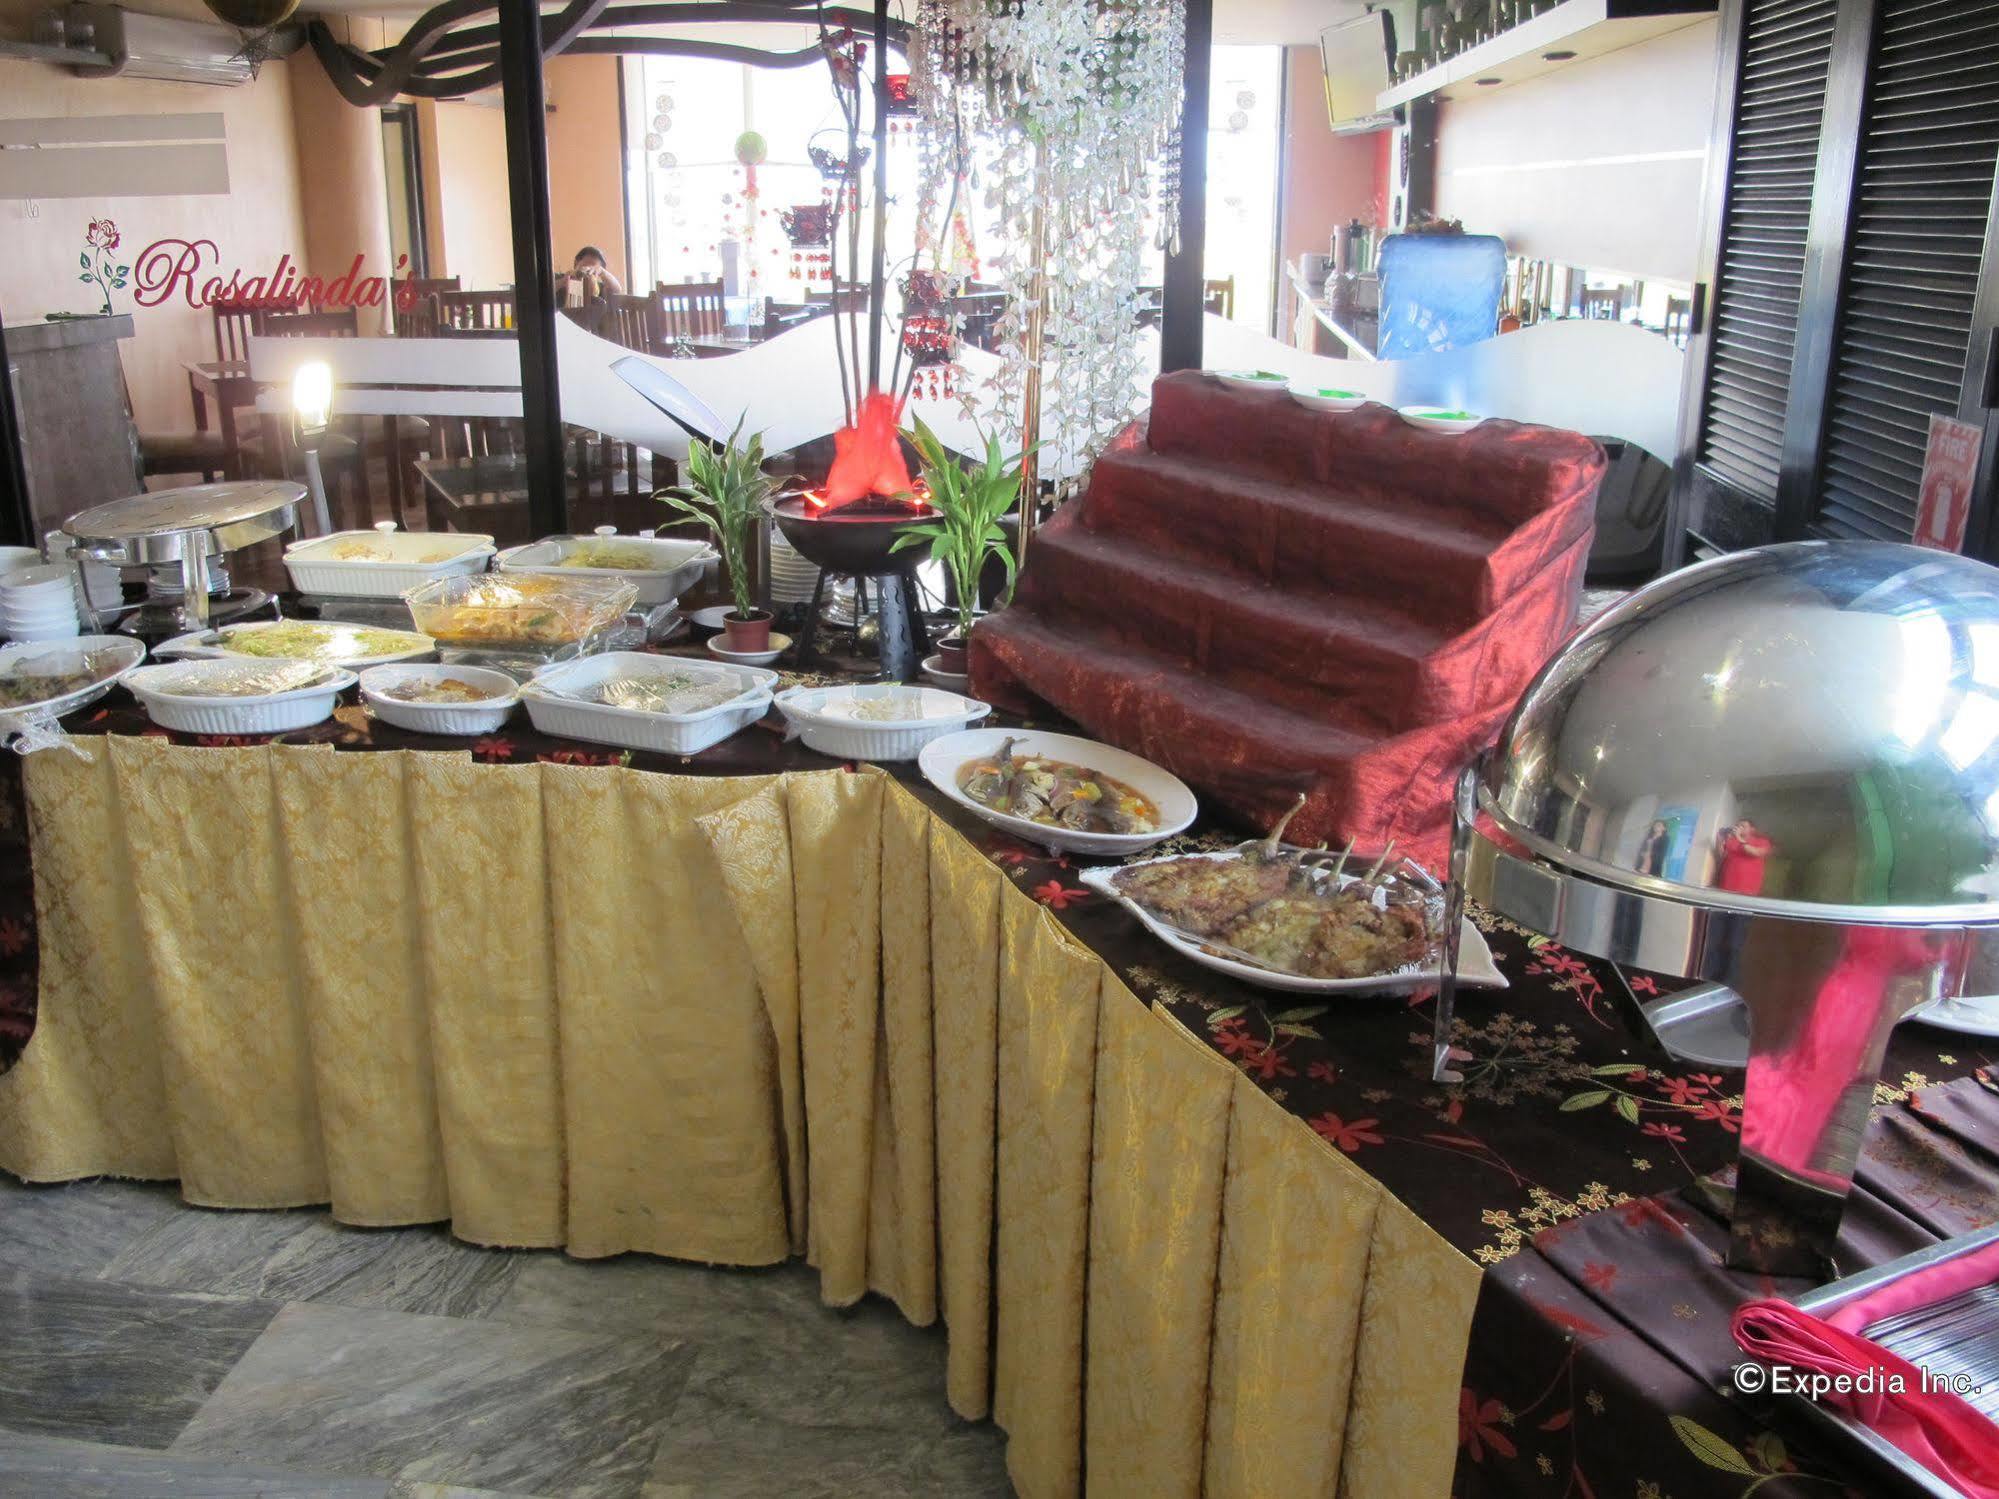 Sugbutel Family Hotel Cebu Ngoại thất bức ảnh